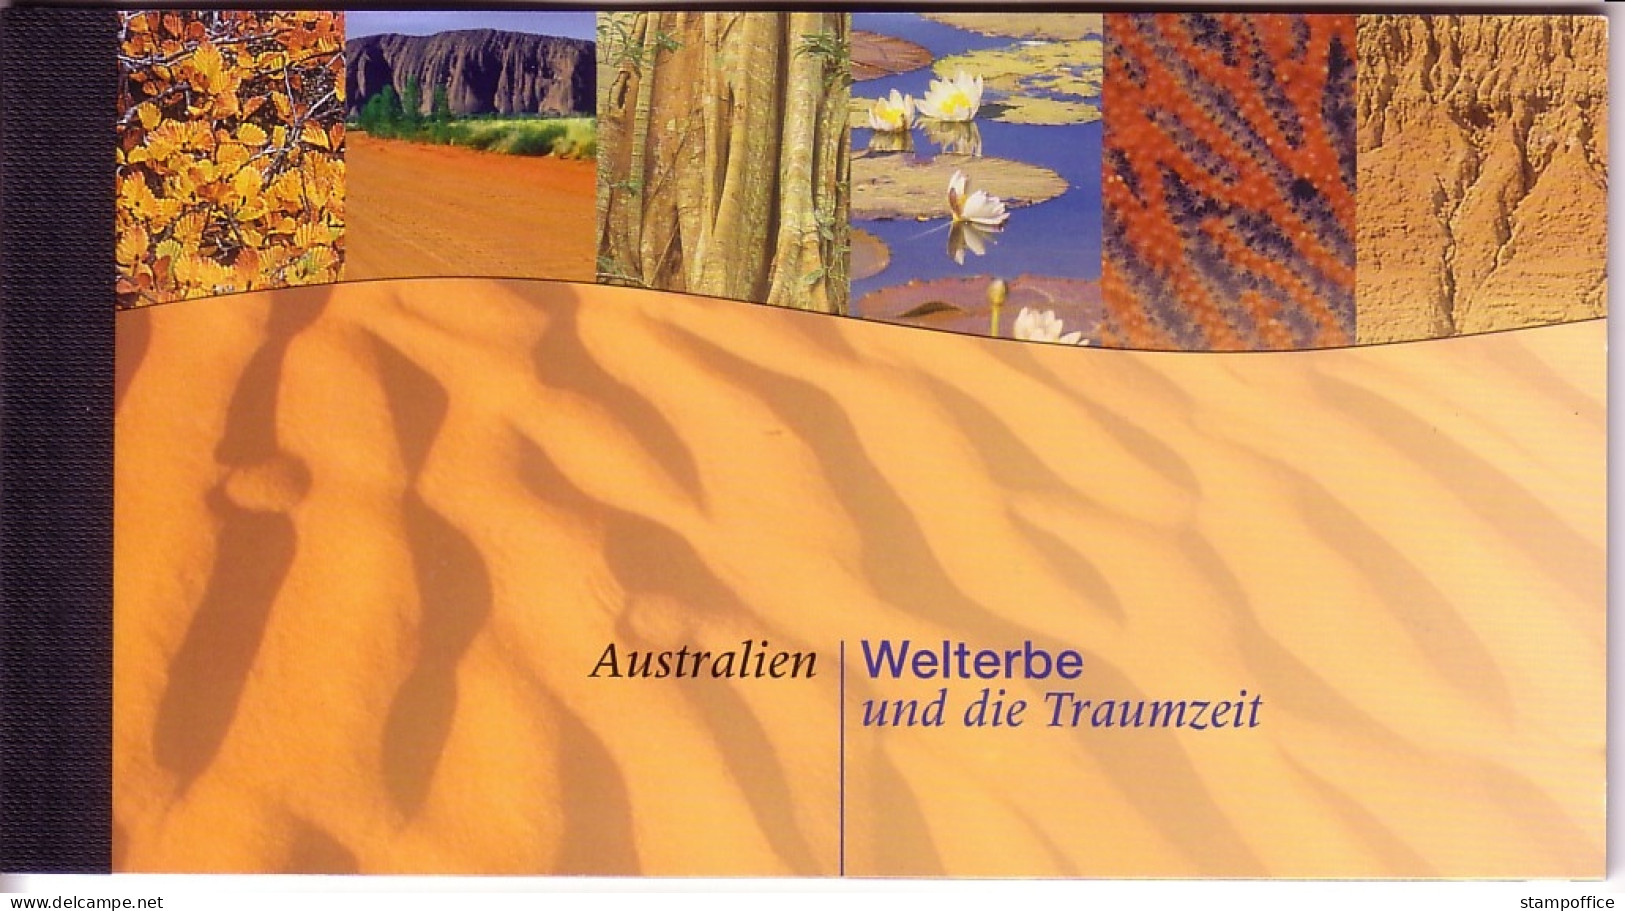 UNO WIEN MH 0-4 POSTFRISCH(MINT) UNESCO-WELTERBE AUSTRALIEN - Libretti